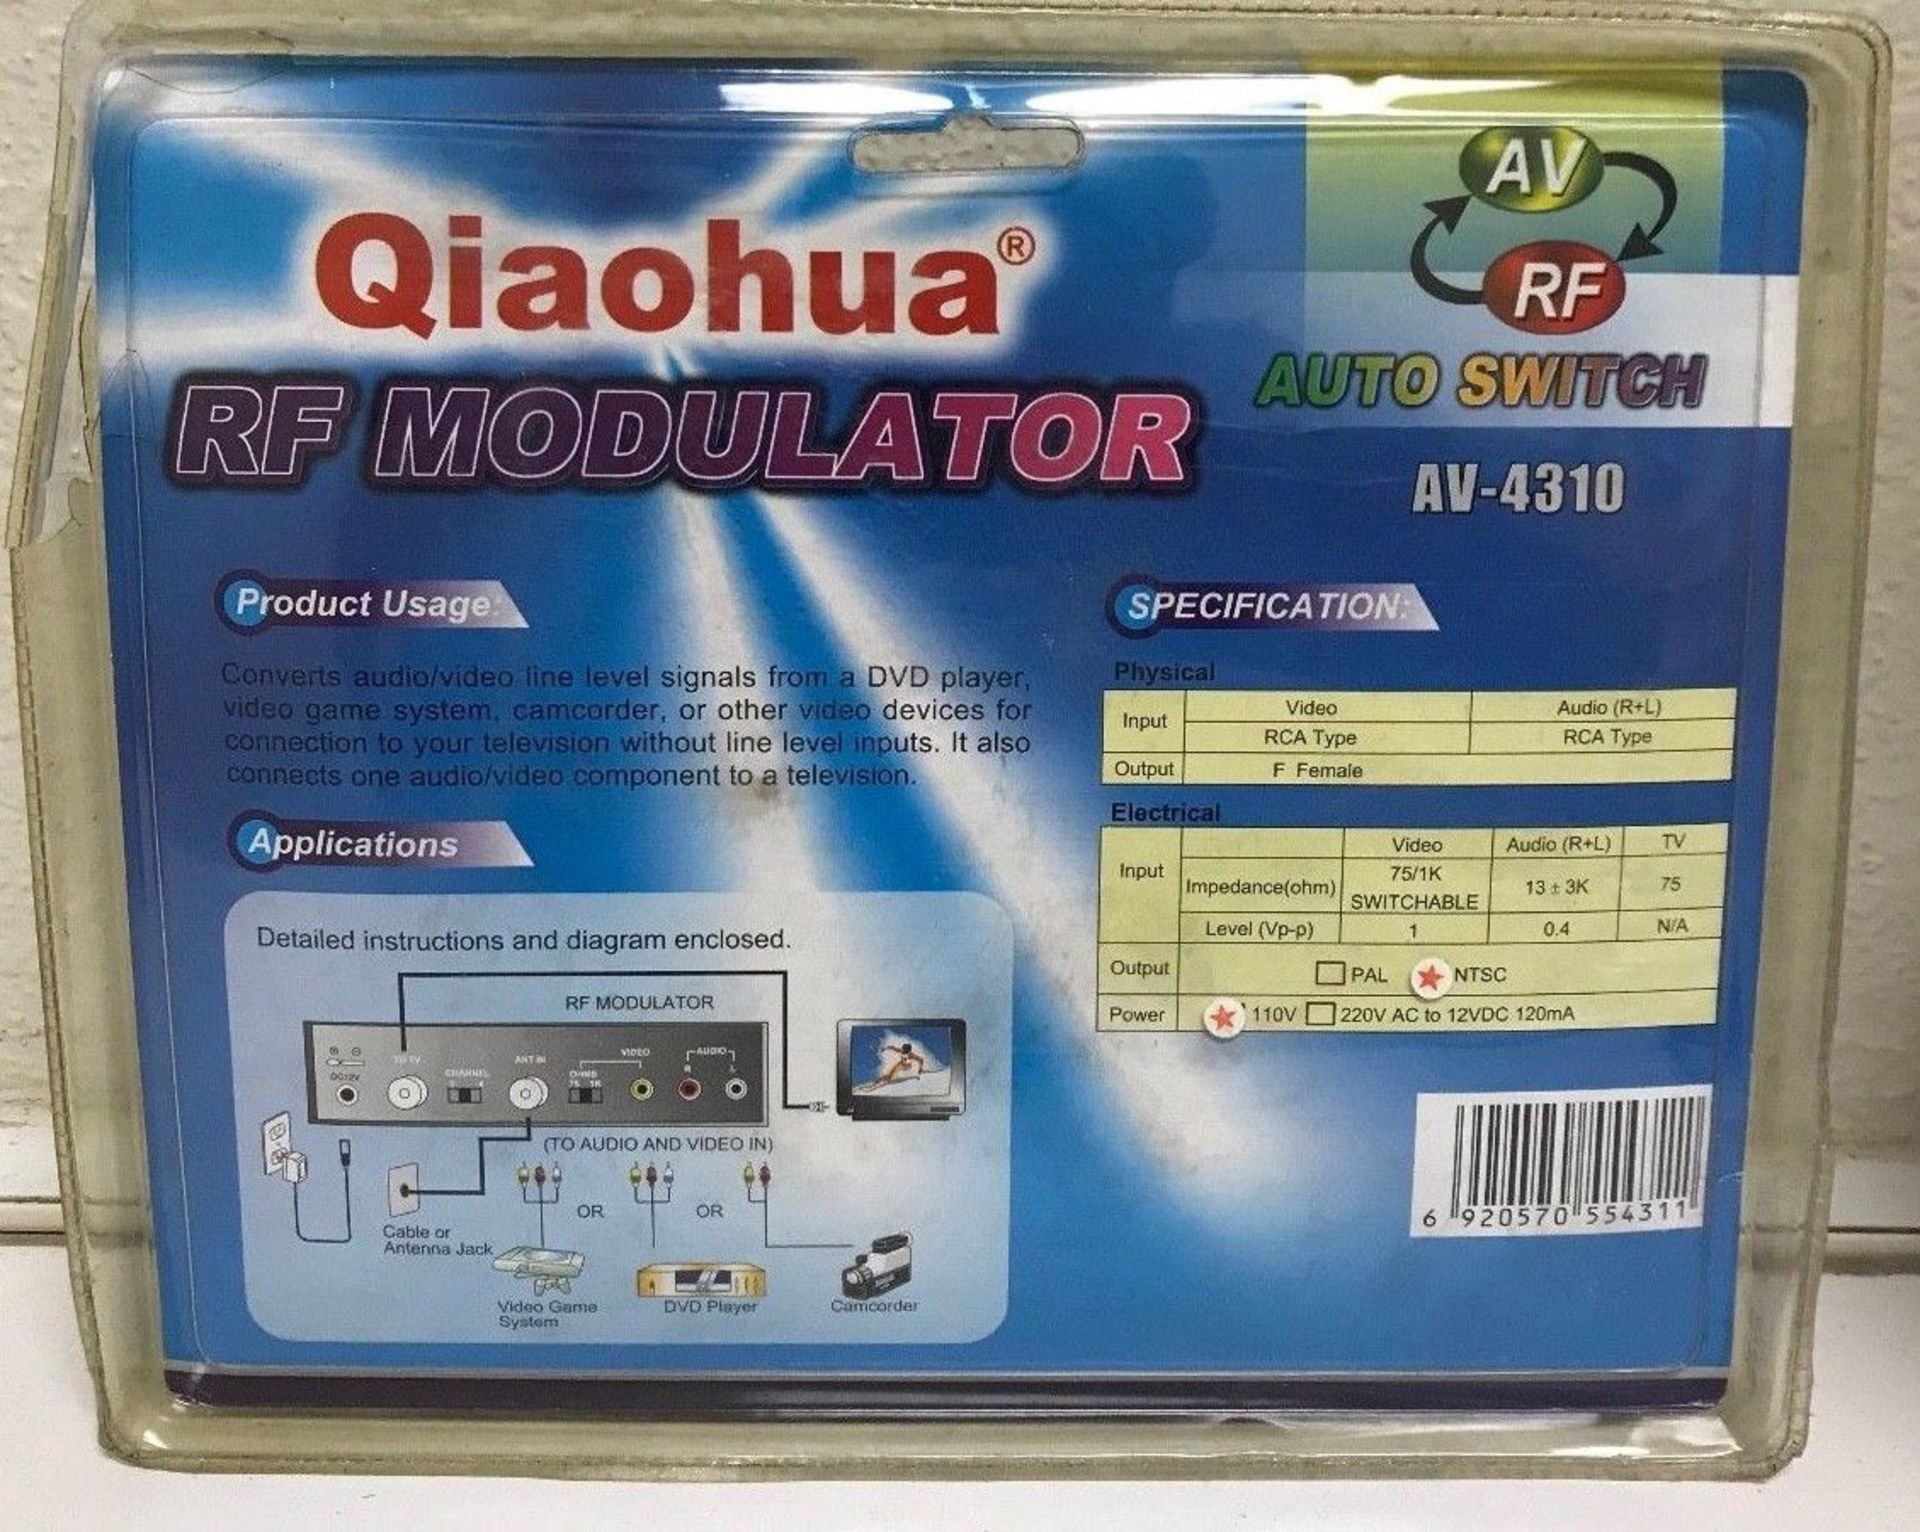 28 X V-4310 Qiaohua RF Modulator AV > RF Auto Switch - Image 2 of 2